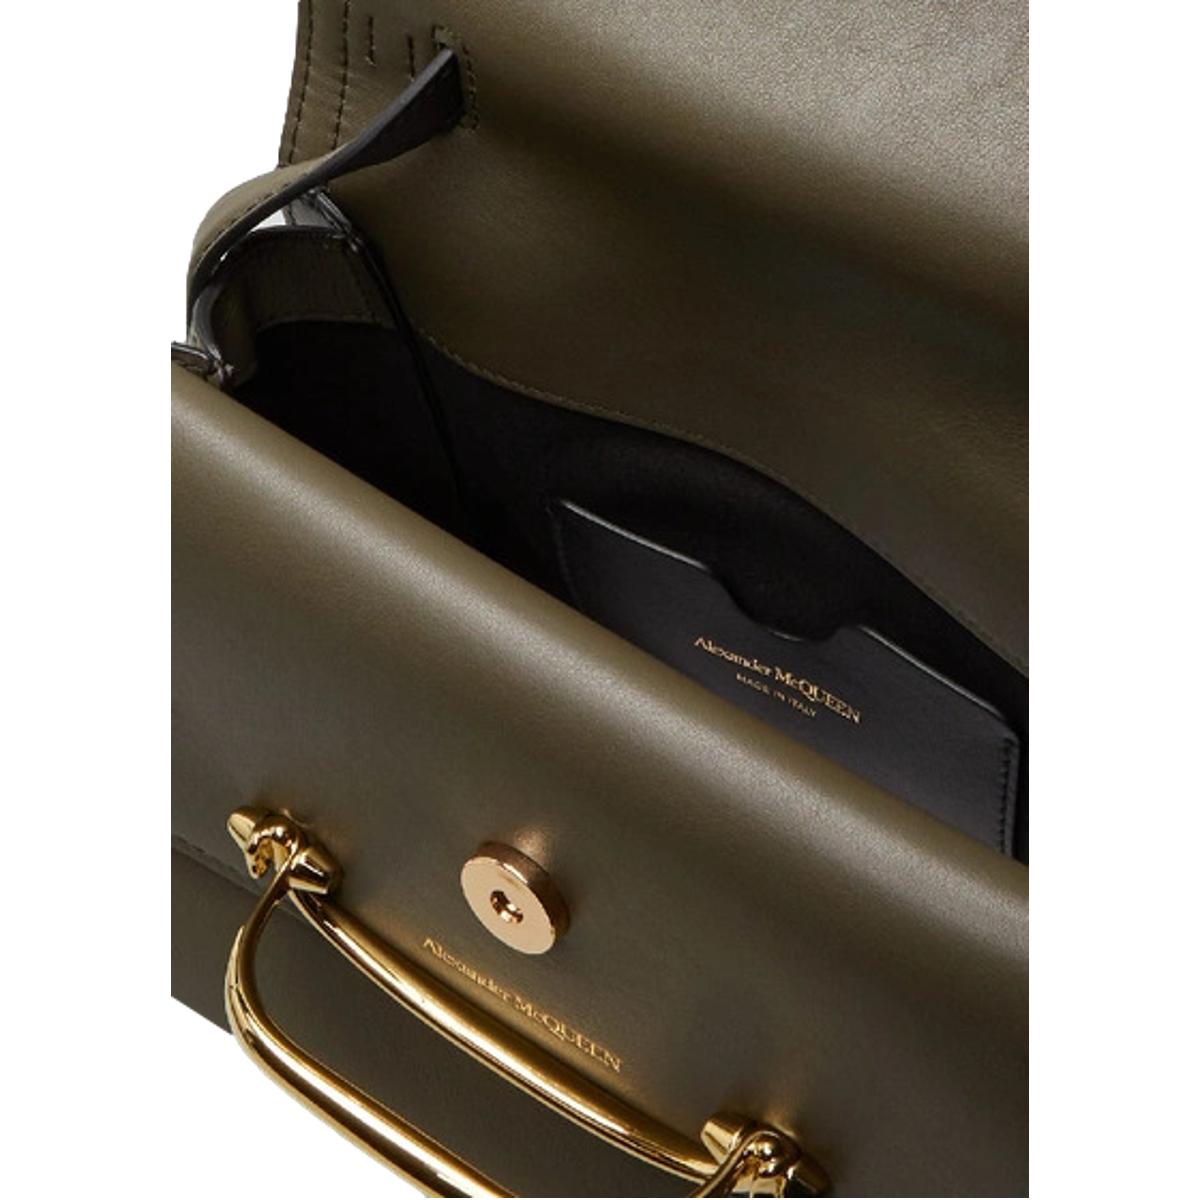 Alexander McQueen The Story Bag Khaki Leather Small Satchel 610021 - LUXURYMRKT